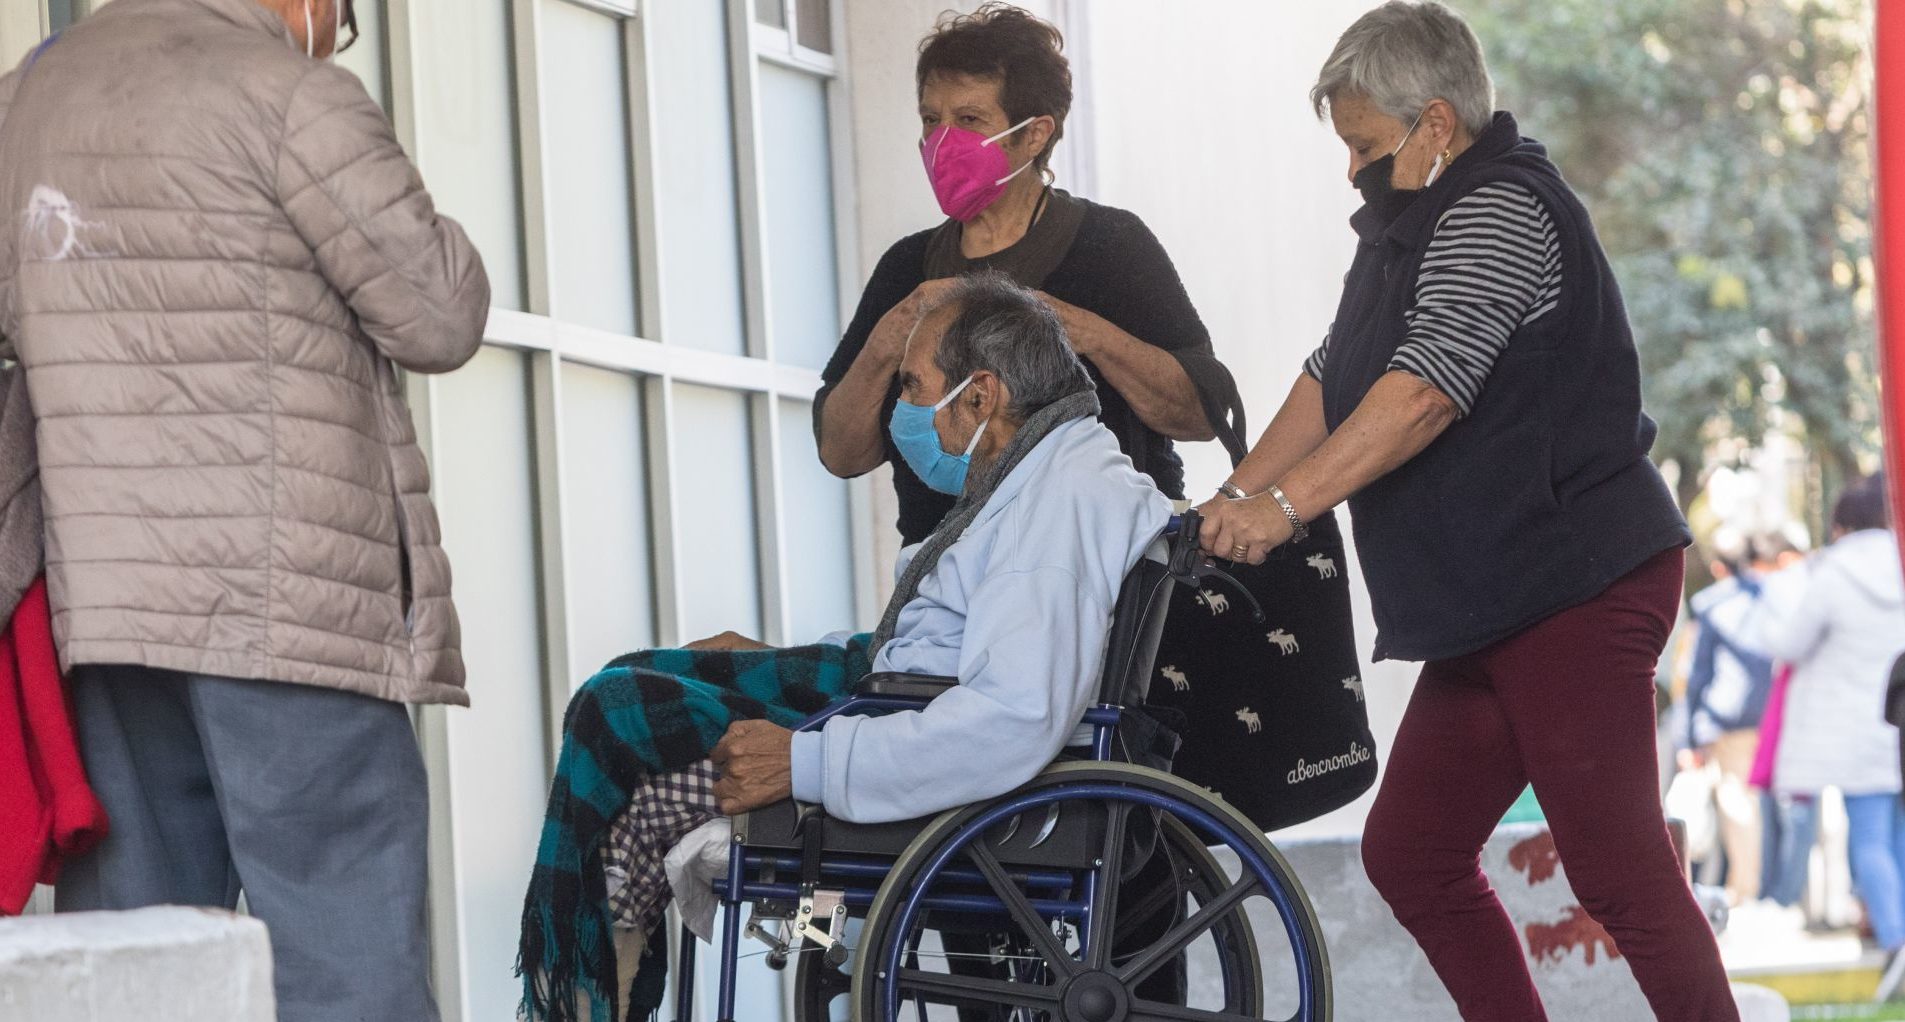 Alcalde en Coahuila dará dióxido de cloro a pacientes con COVID